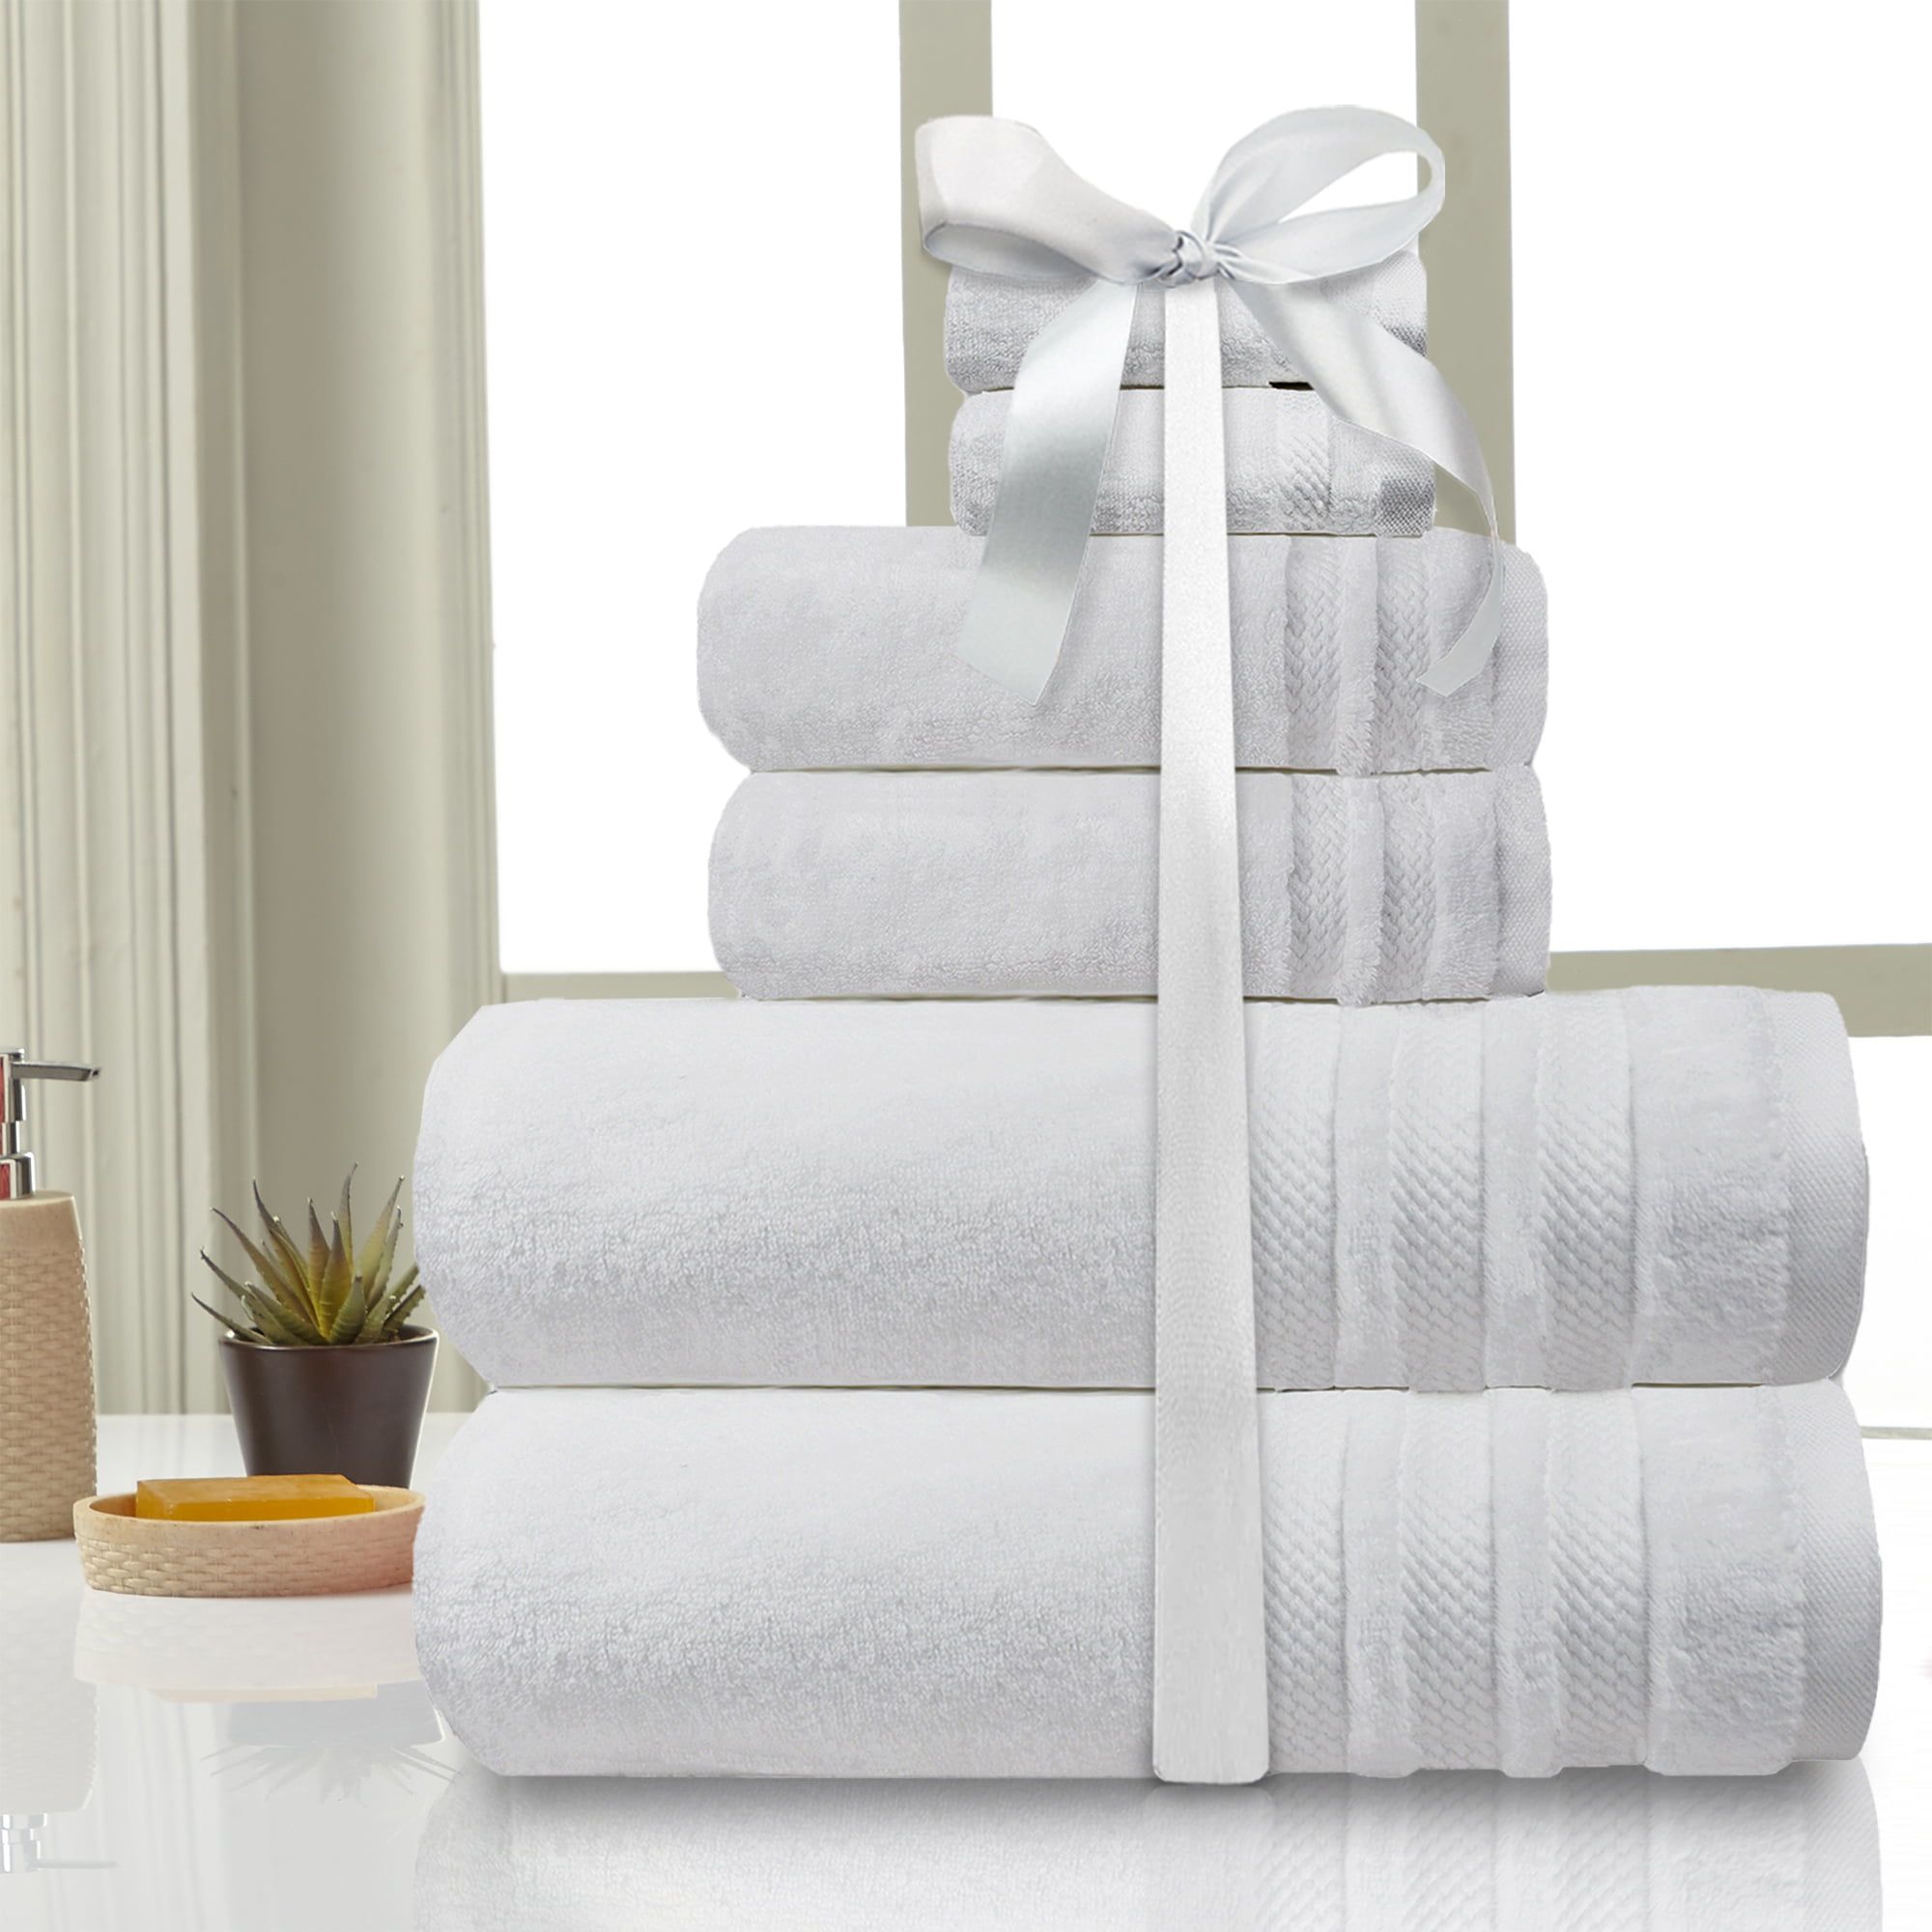 LANE LINEN 18 Piece Towel Set - 100% Cotton Bath Towels Soft &  FluffyBathroom Zero Twist Shower Extra Absorbent for Bathroom 6 Hand Wash  Cloths Chocolate - Yahoo Shopping